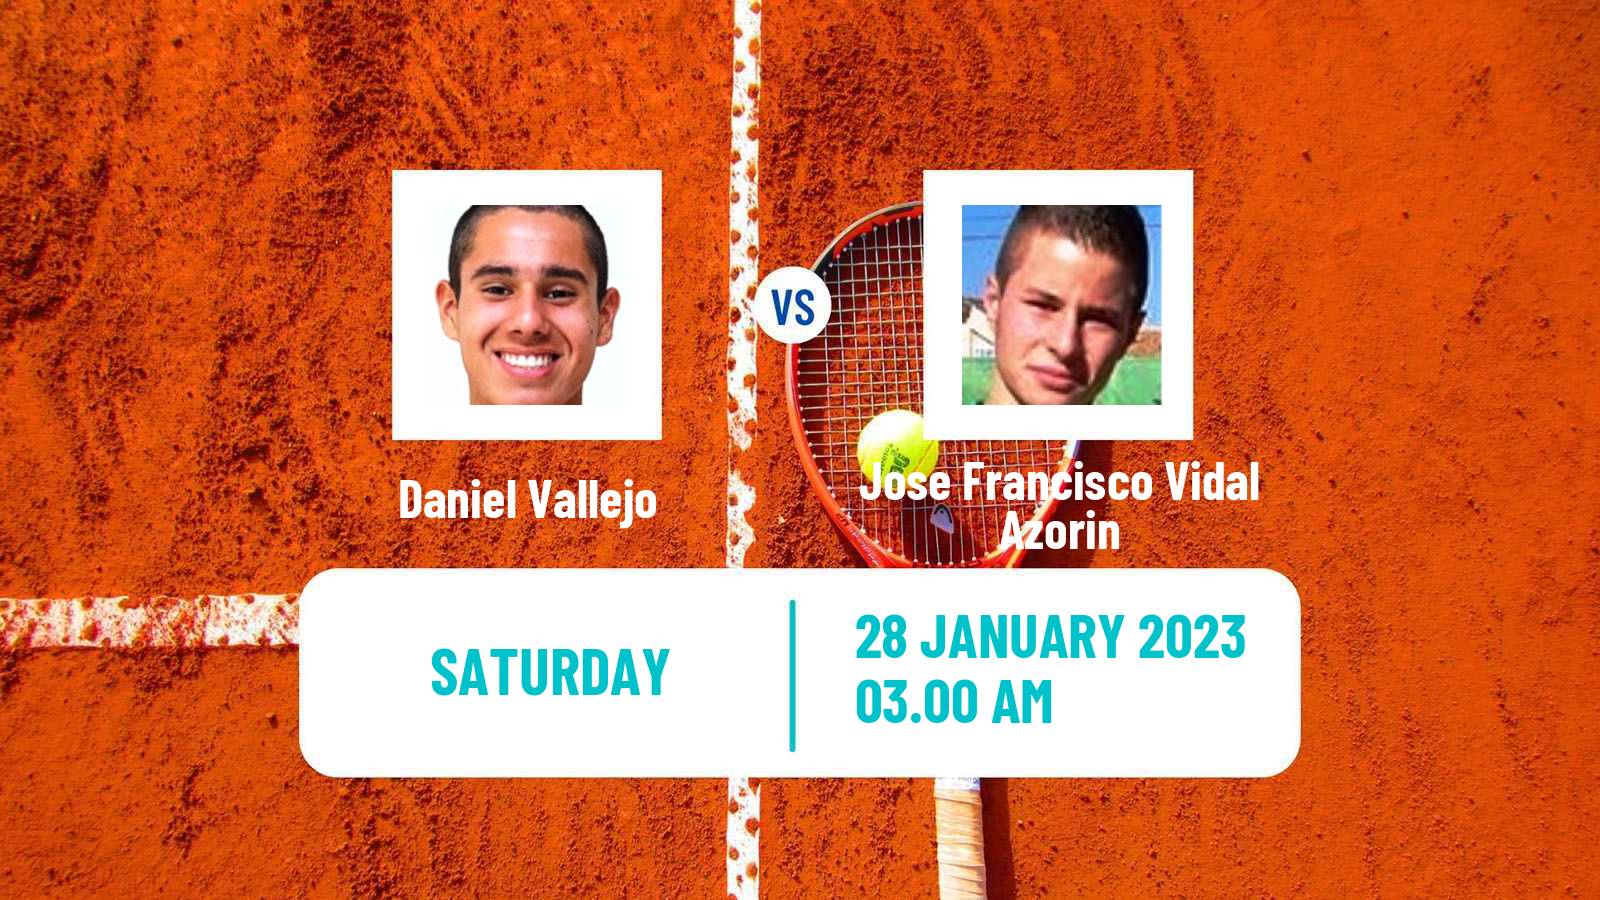 Tennis ITF Tournaments Daniel Vallejo - Jose Francisco Vidal Azorin